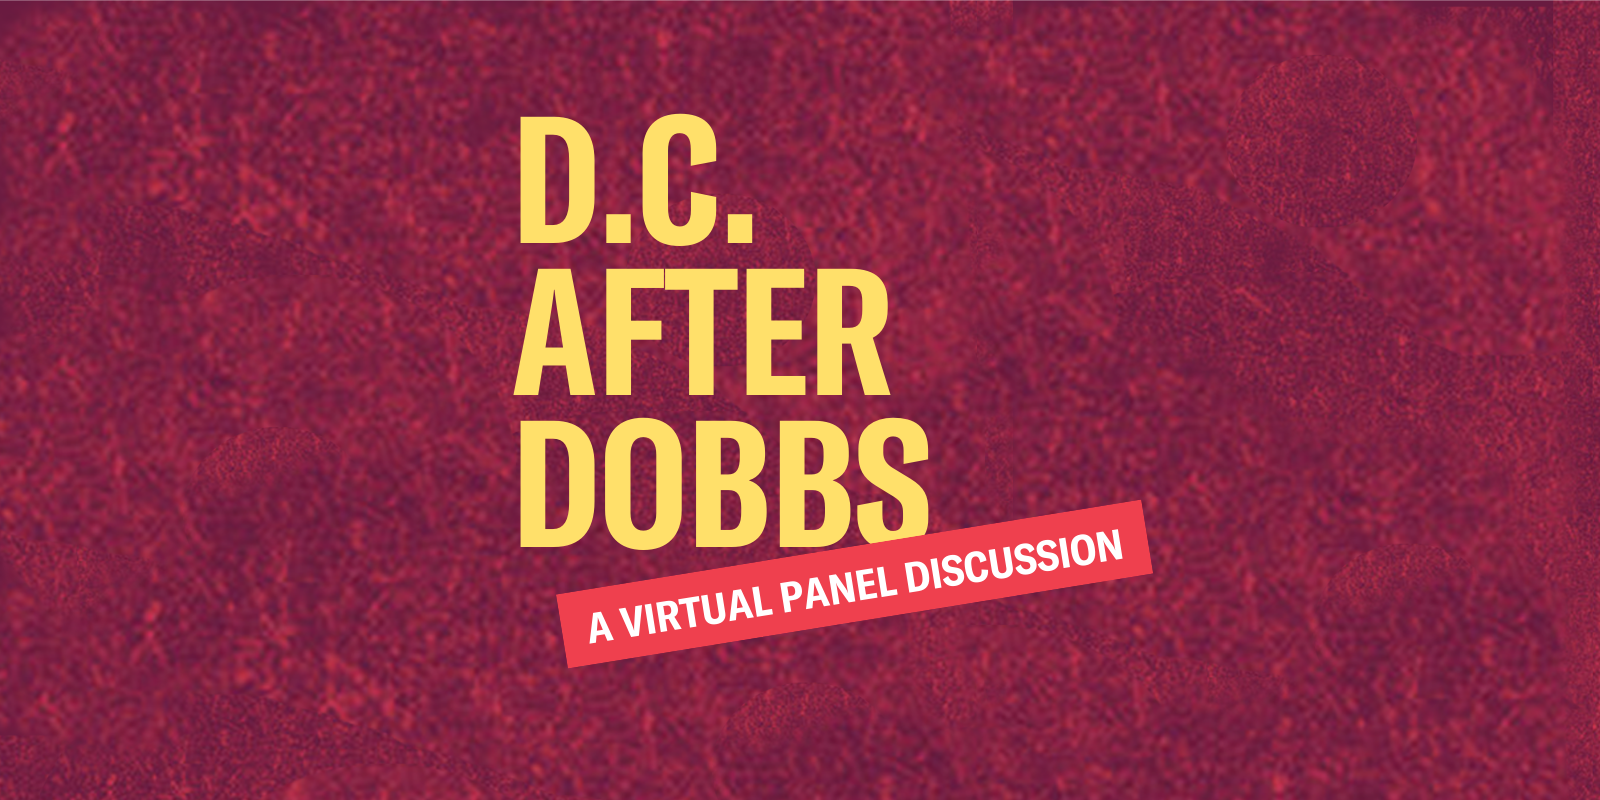 D.C. After Dobbs